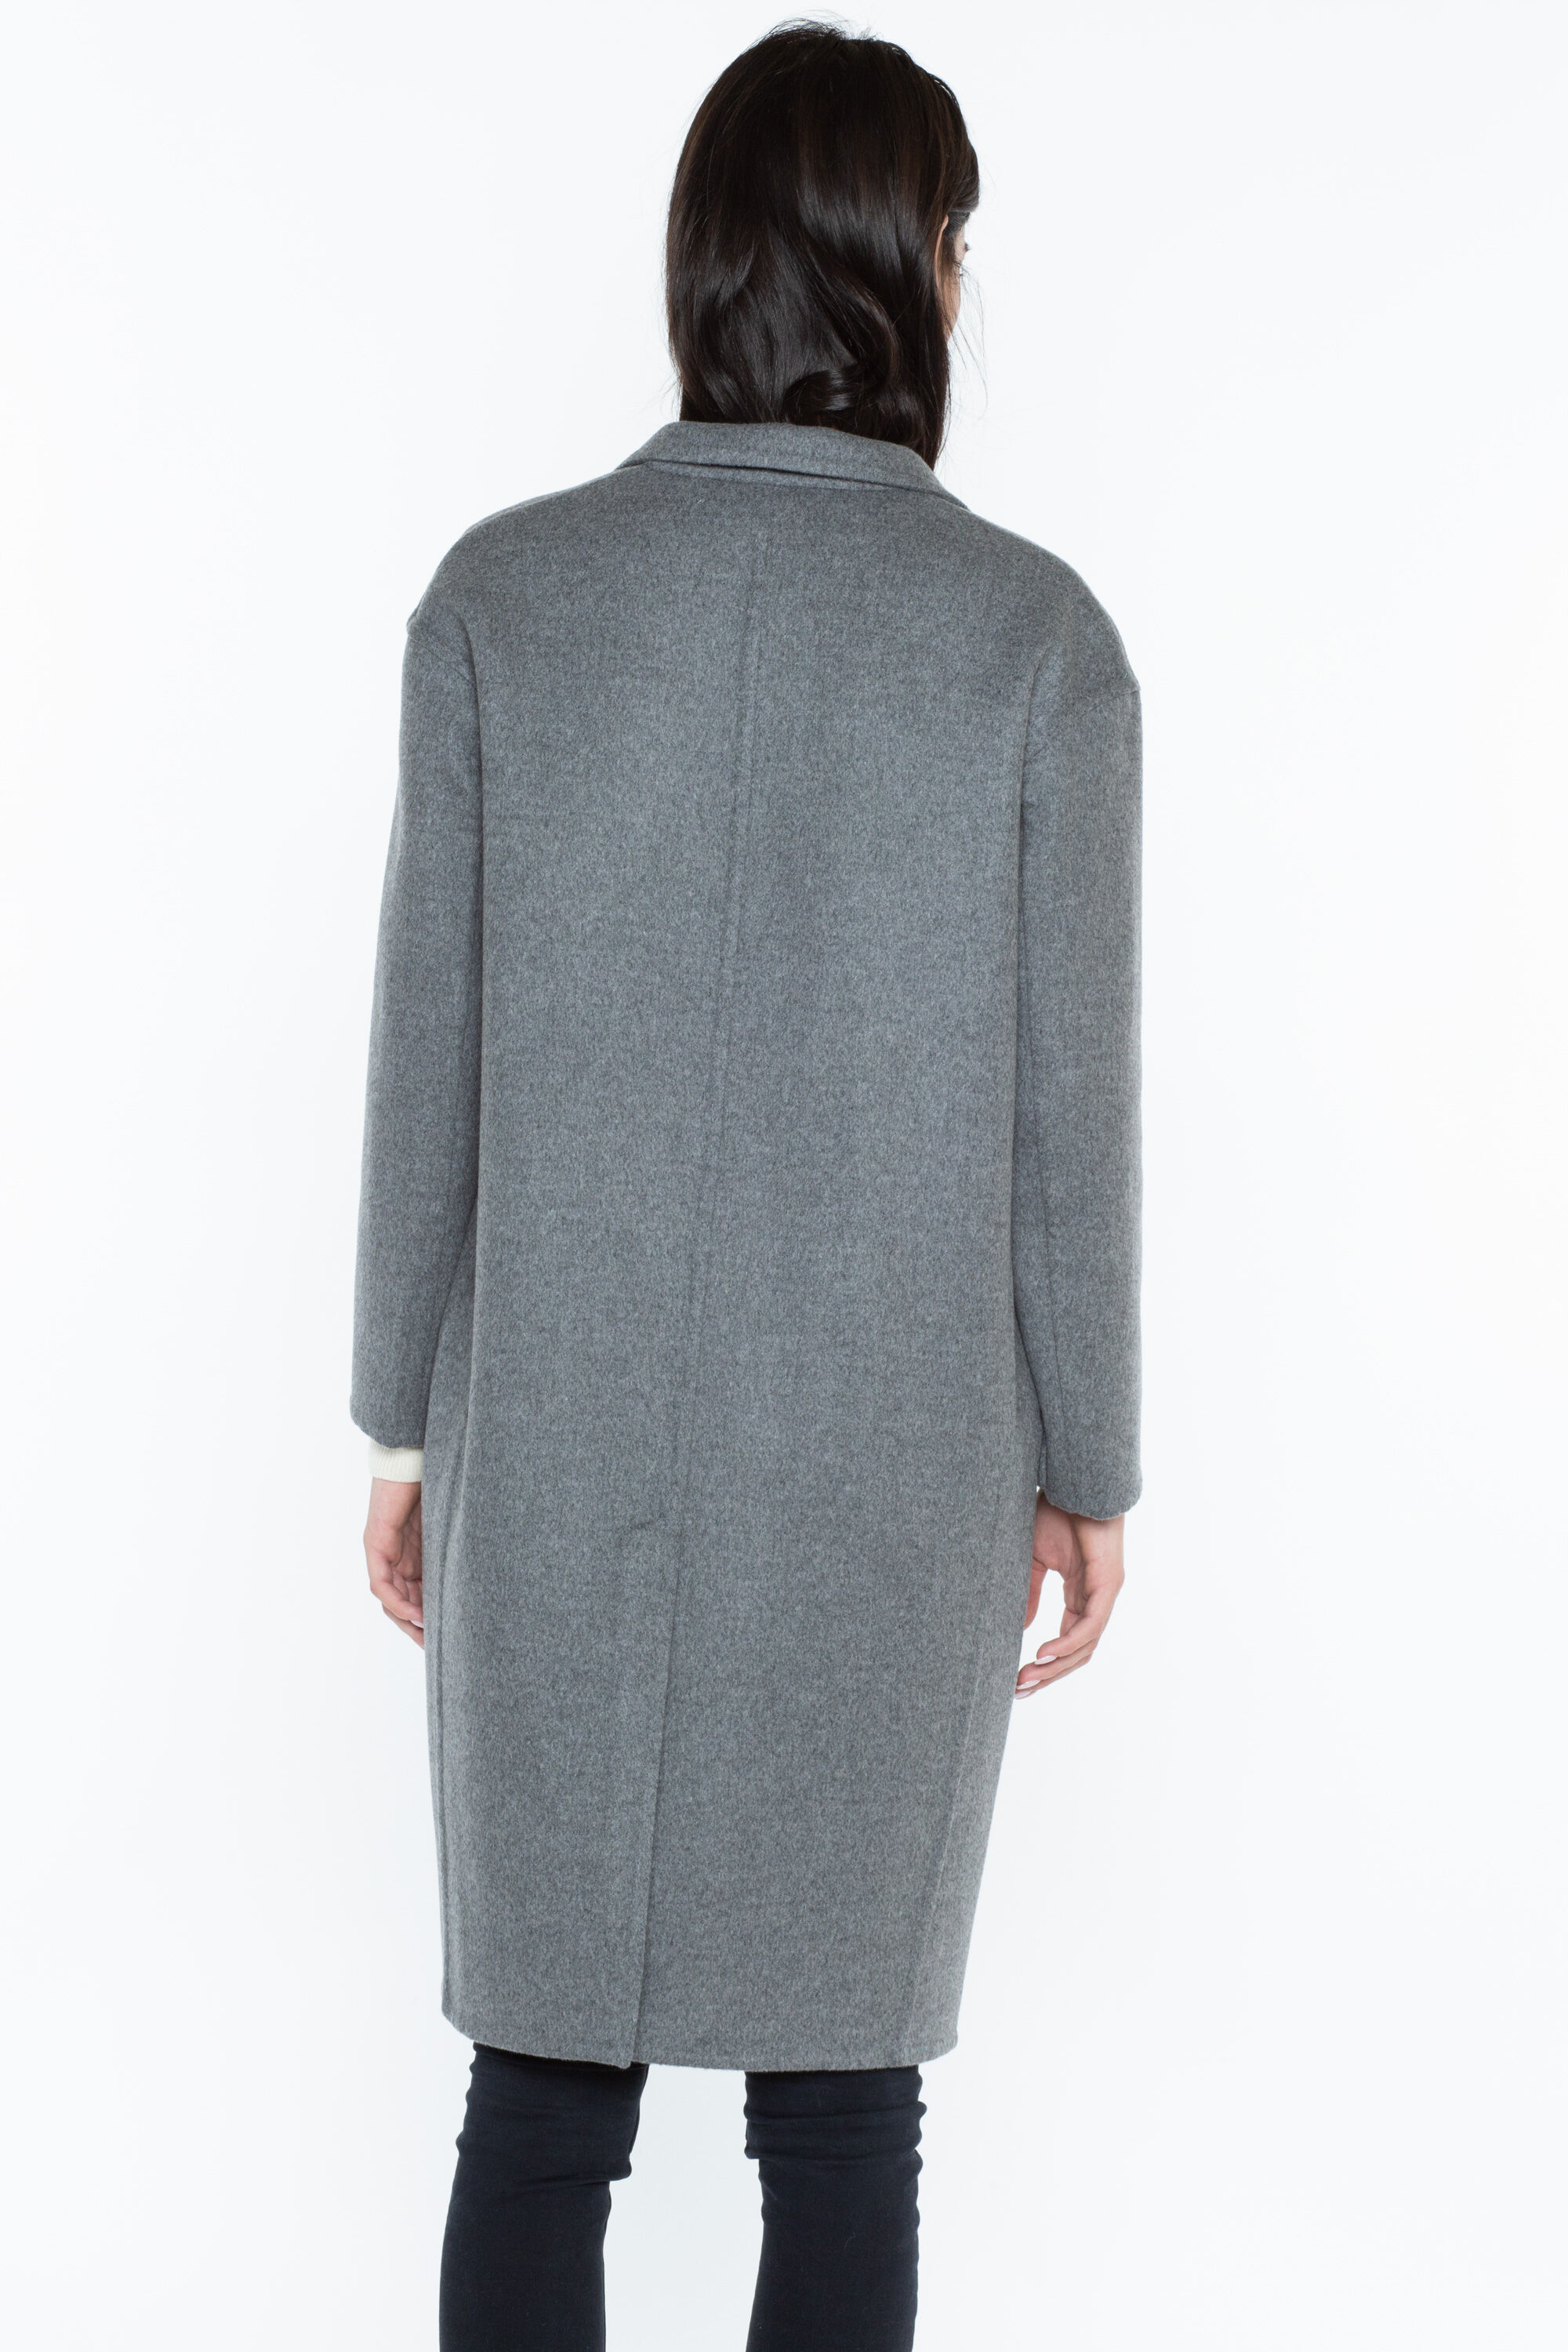 JENNIE LIU Women's 100% Pure Cashmere Cocoon Dolman Sleeve Cowlneck Sweater  - J CASHMERE